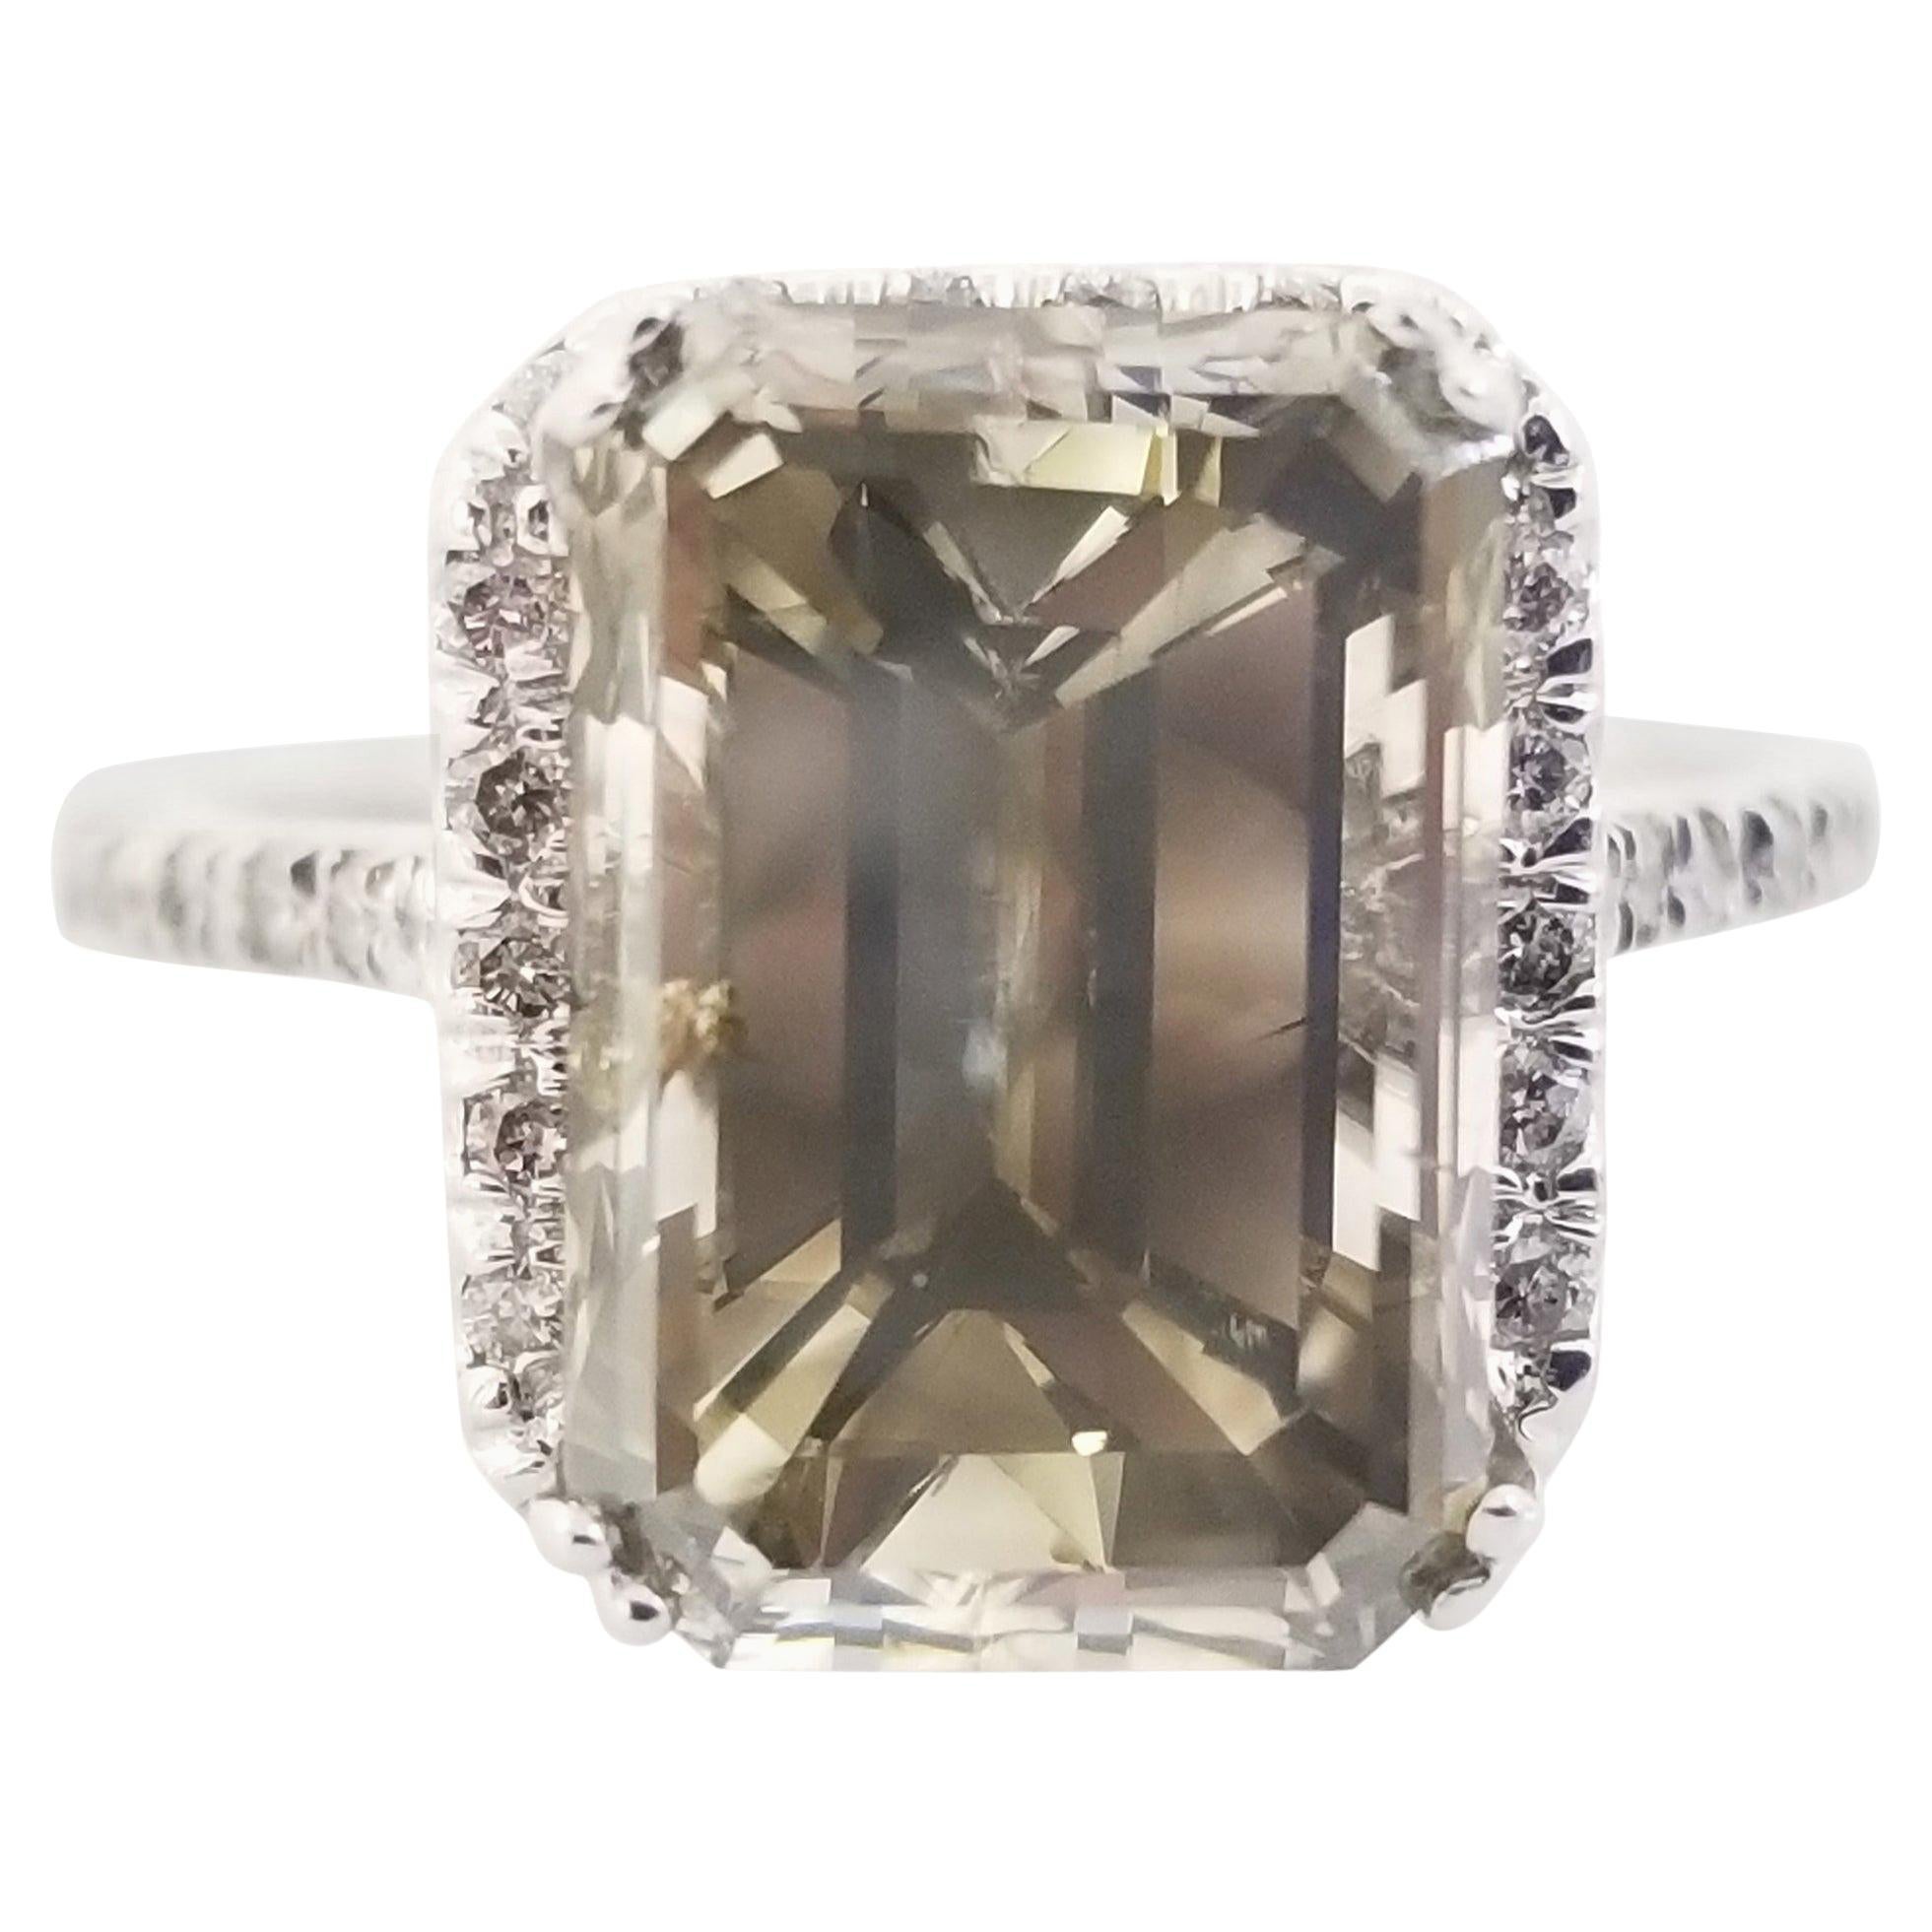 IGI 5.51 Carat Emerald Cut Fancy Gray Diamond Ring White Gold 14 Karat